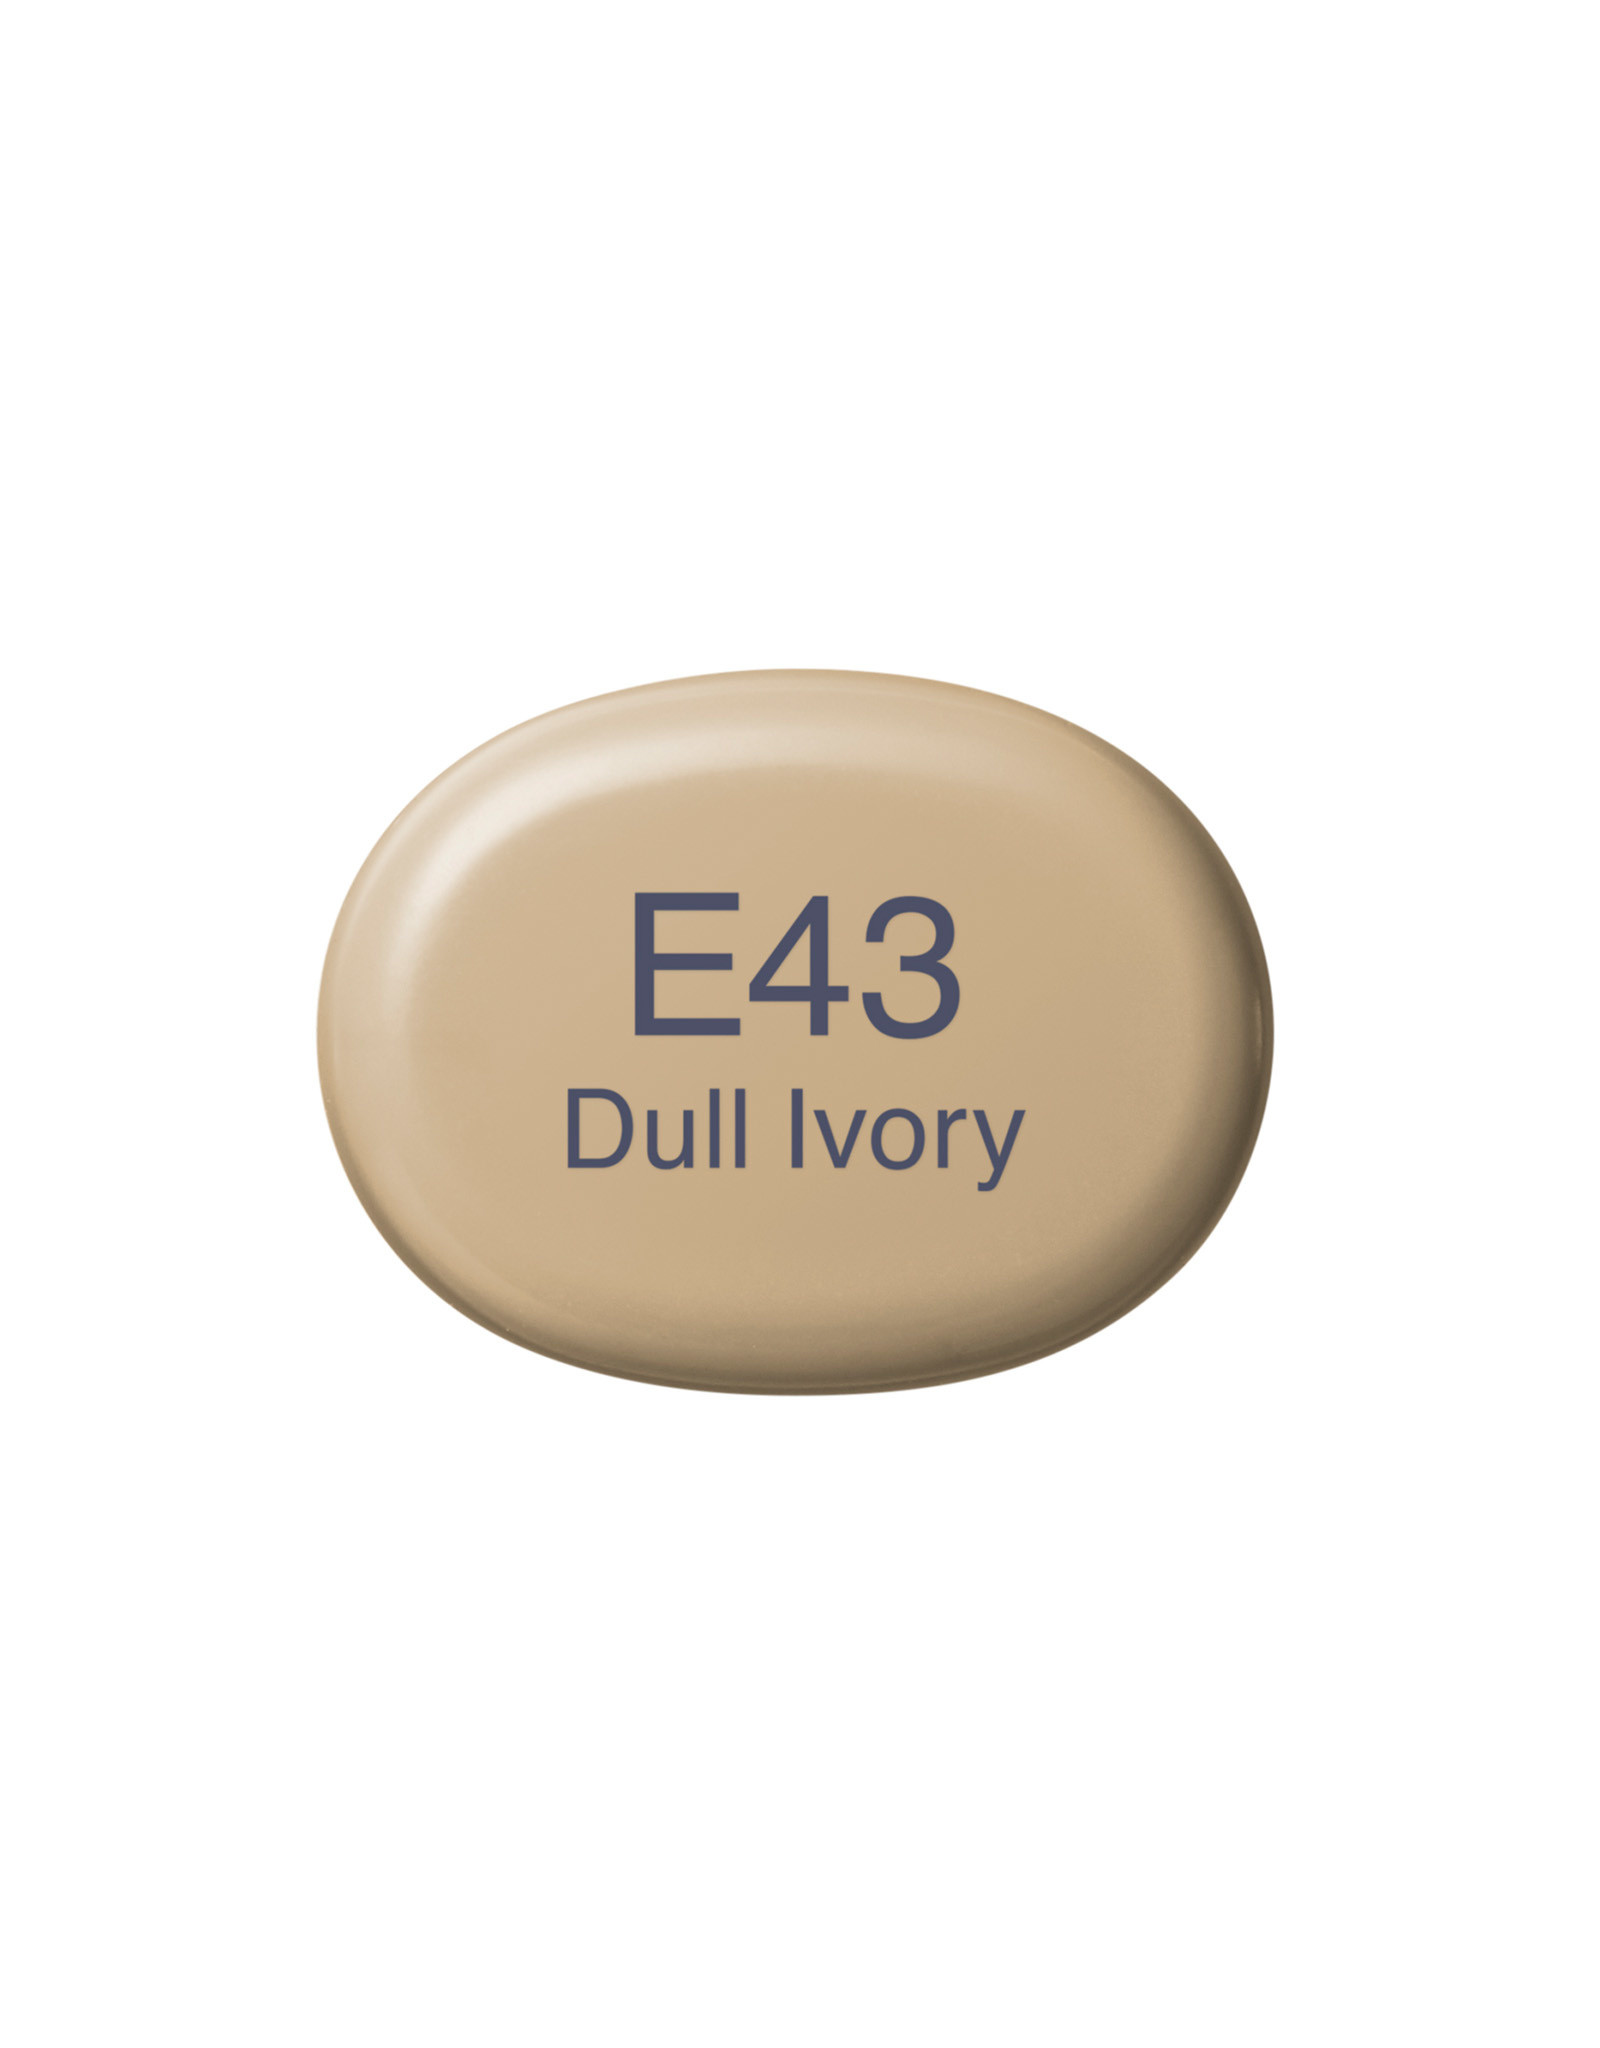 COPIC COPIC Sketch Marker E43 Dull Ivory